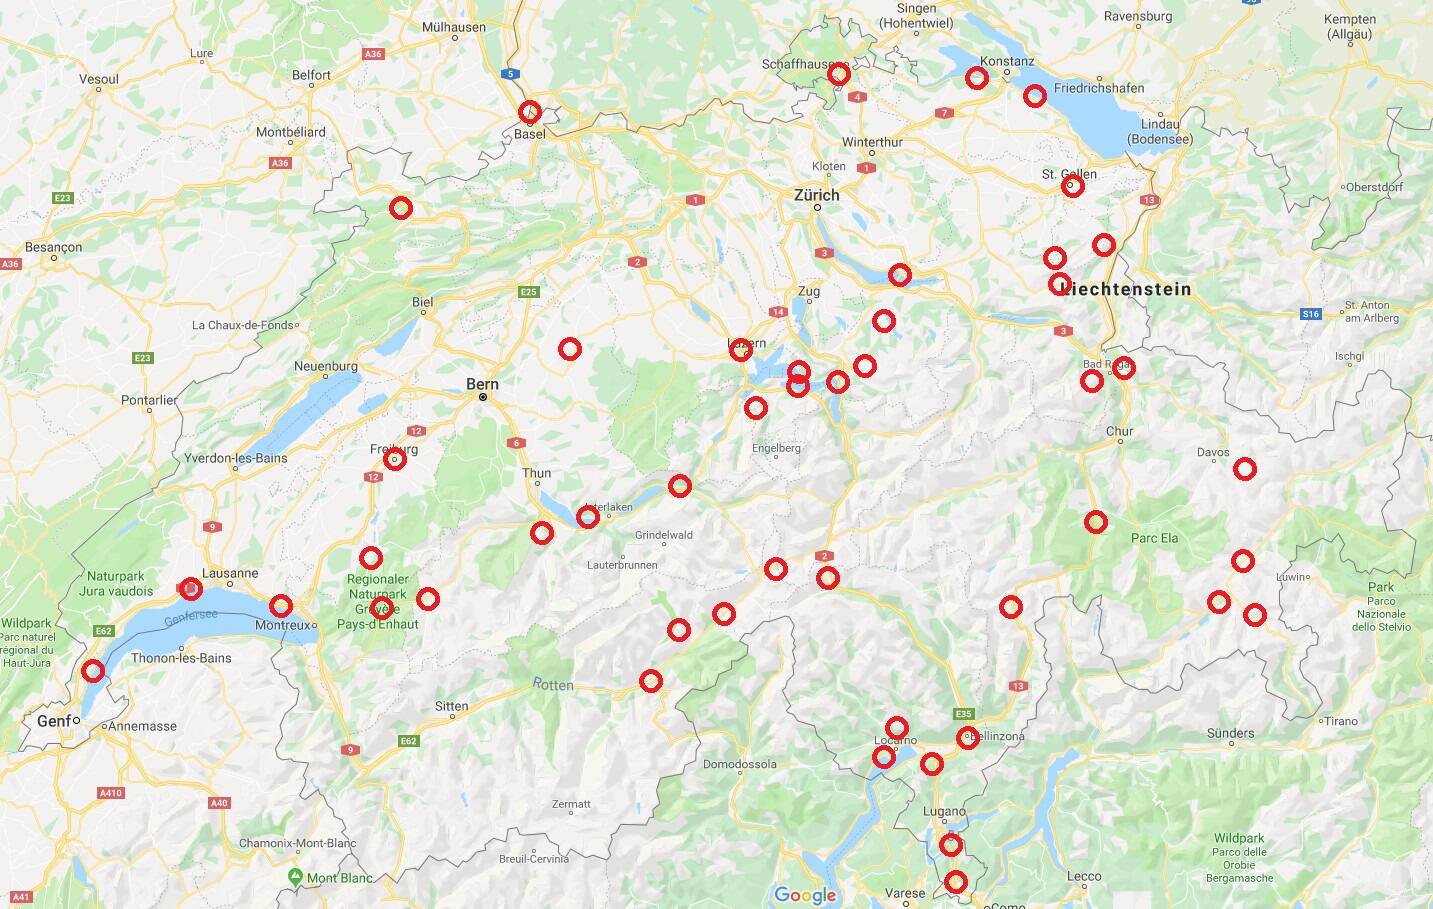 Grand Tour Switzerland Karte aller Foto Spots